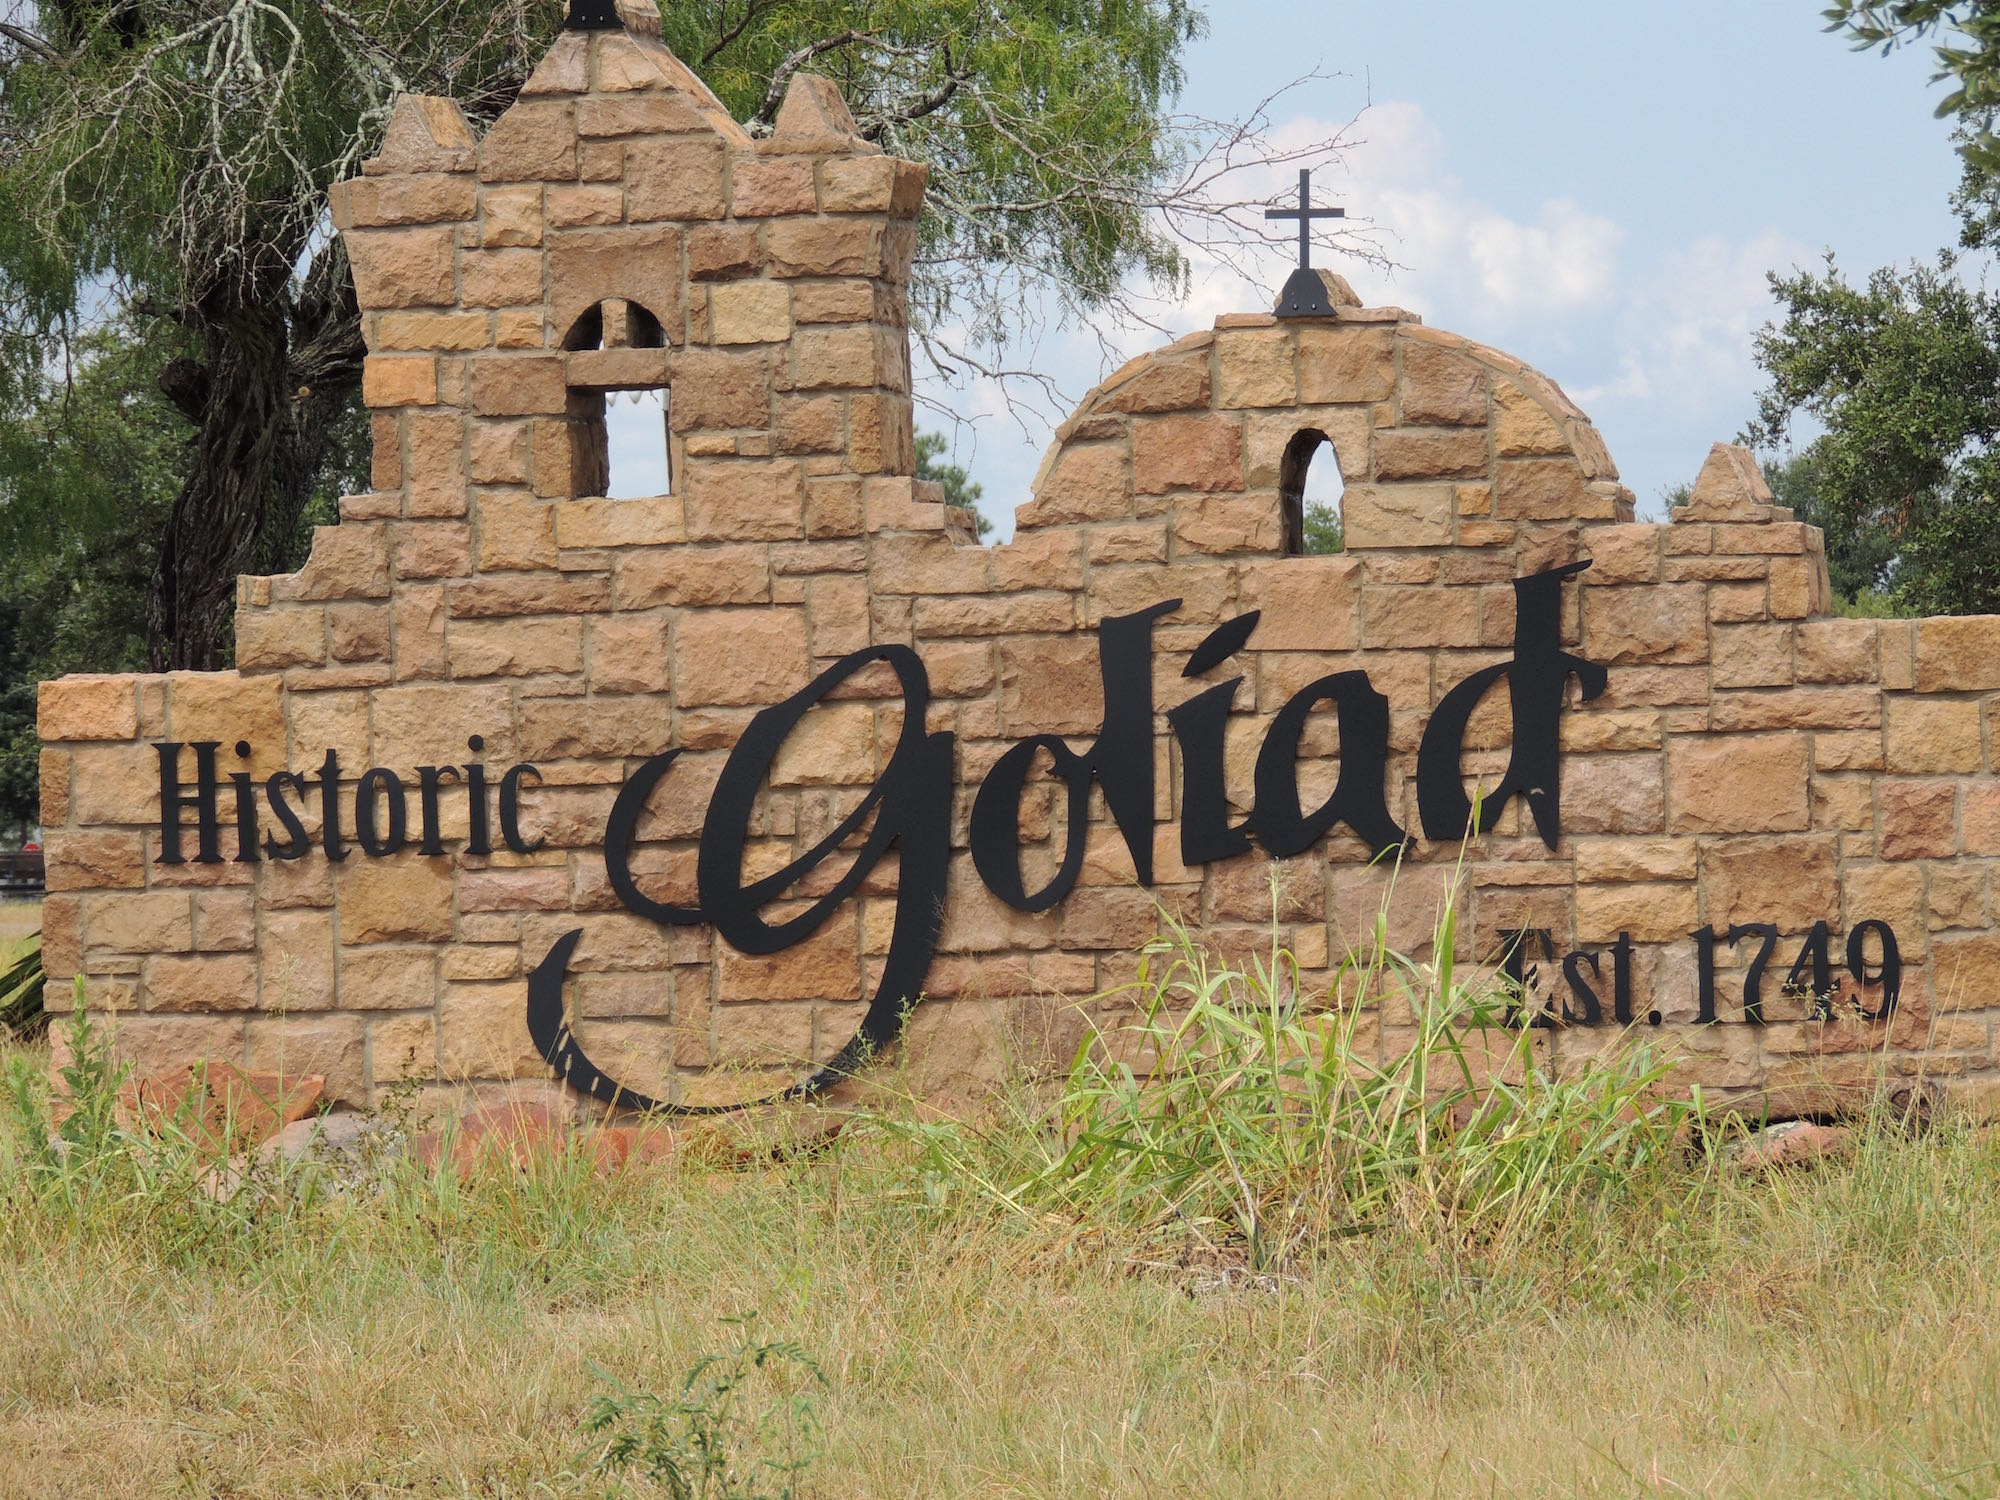 “Remember Goliad!”